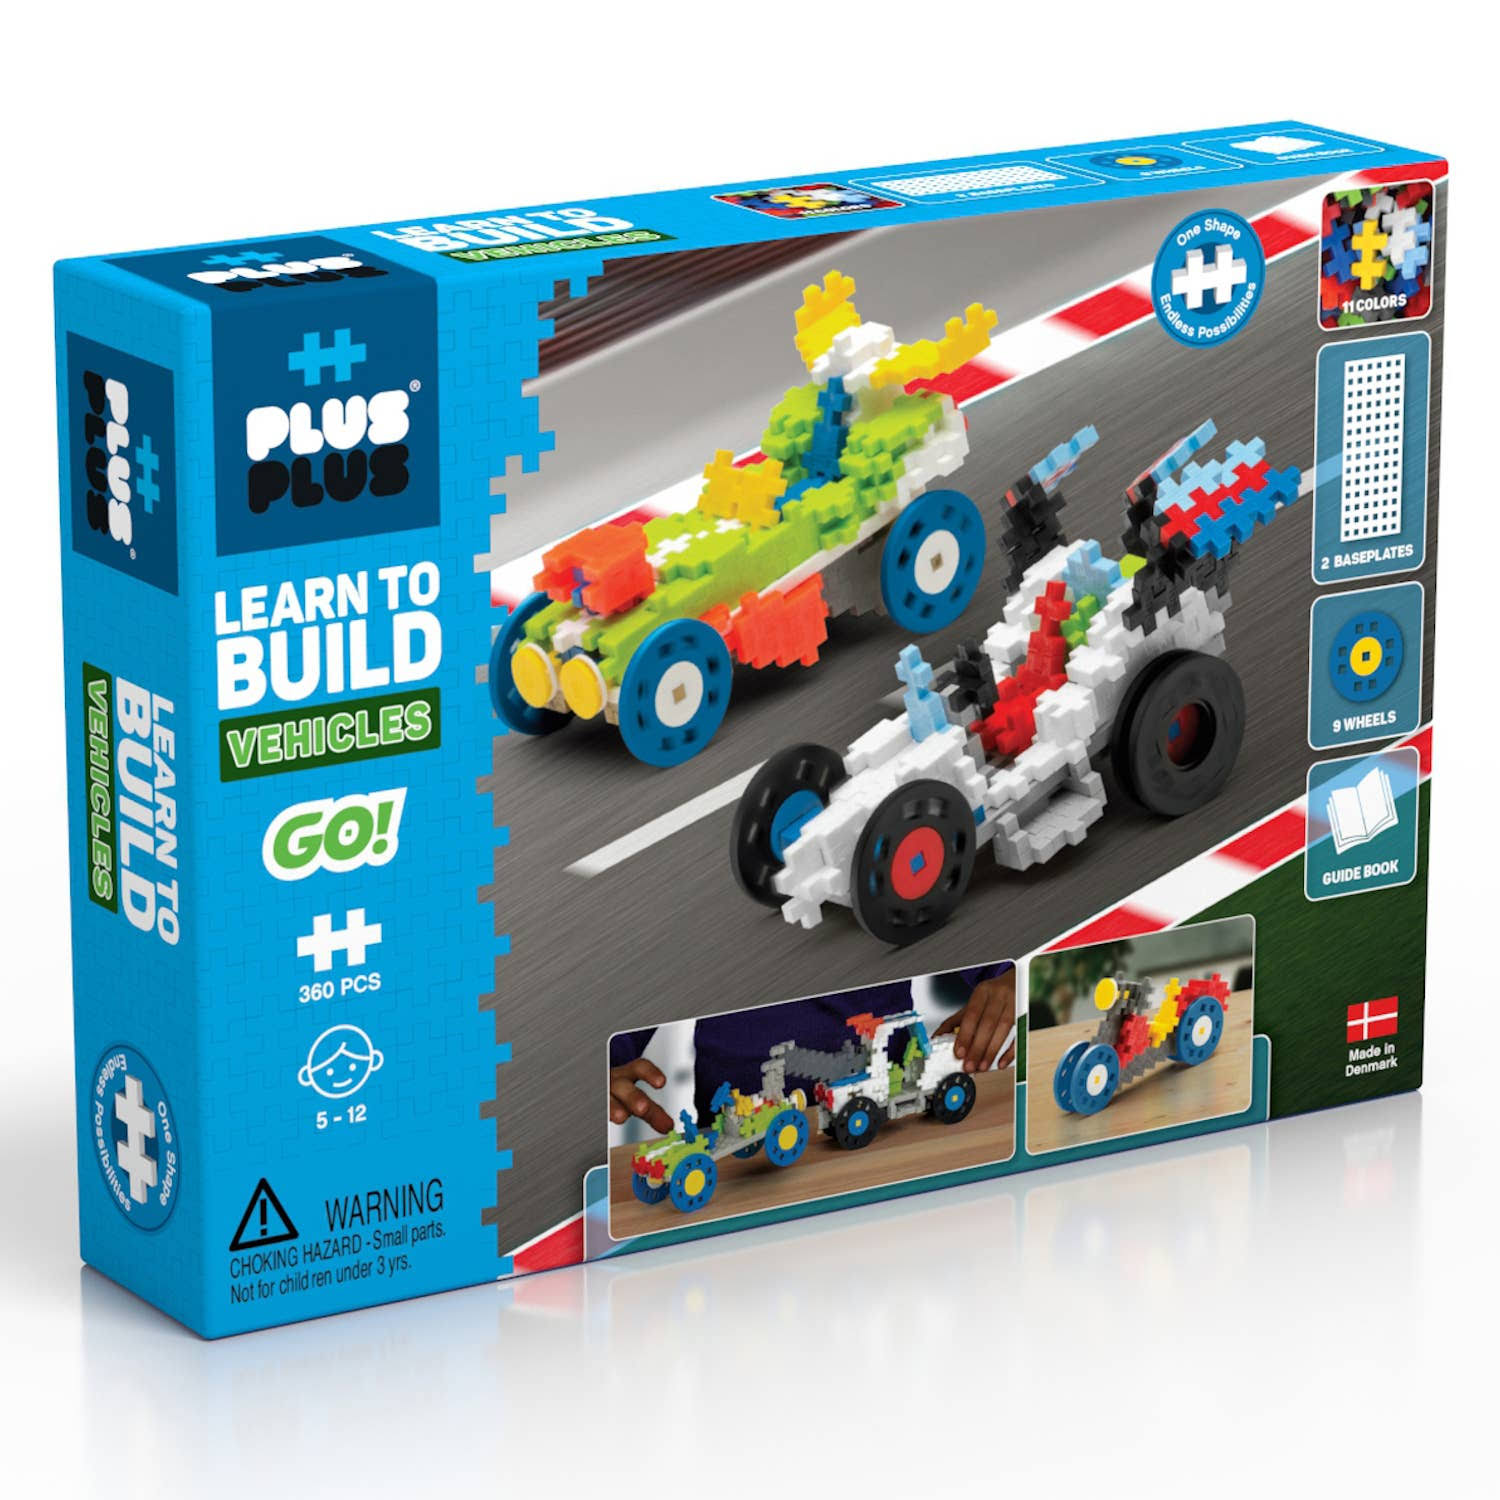 PLUS PLUS - Learn To Build Vehicles, 360 Pieces - Construction Building Stem / Steam Toy, Interlocking Mini Puzzle Blocks For Kids